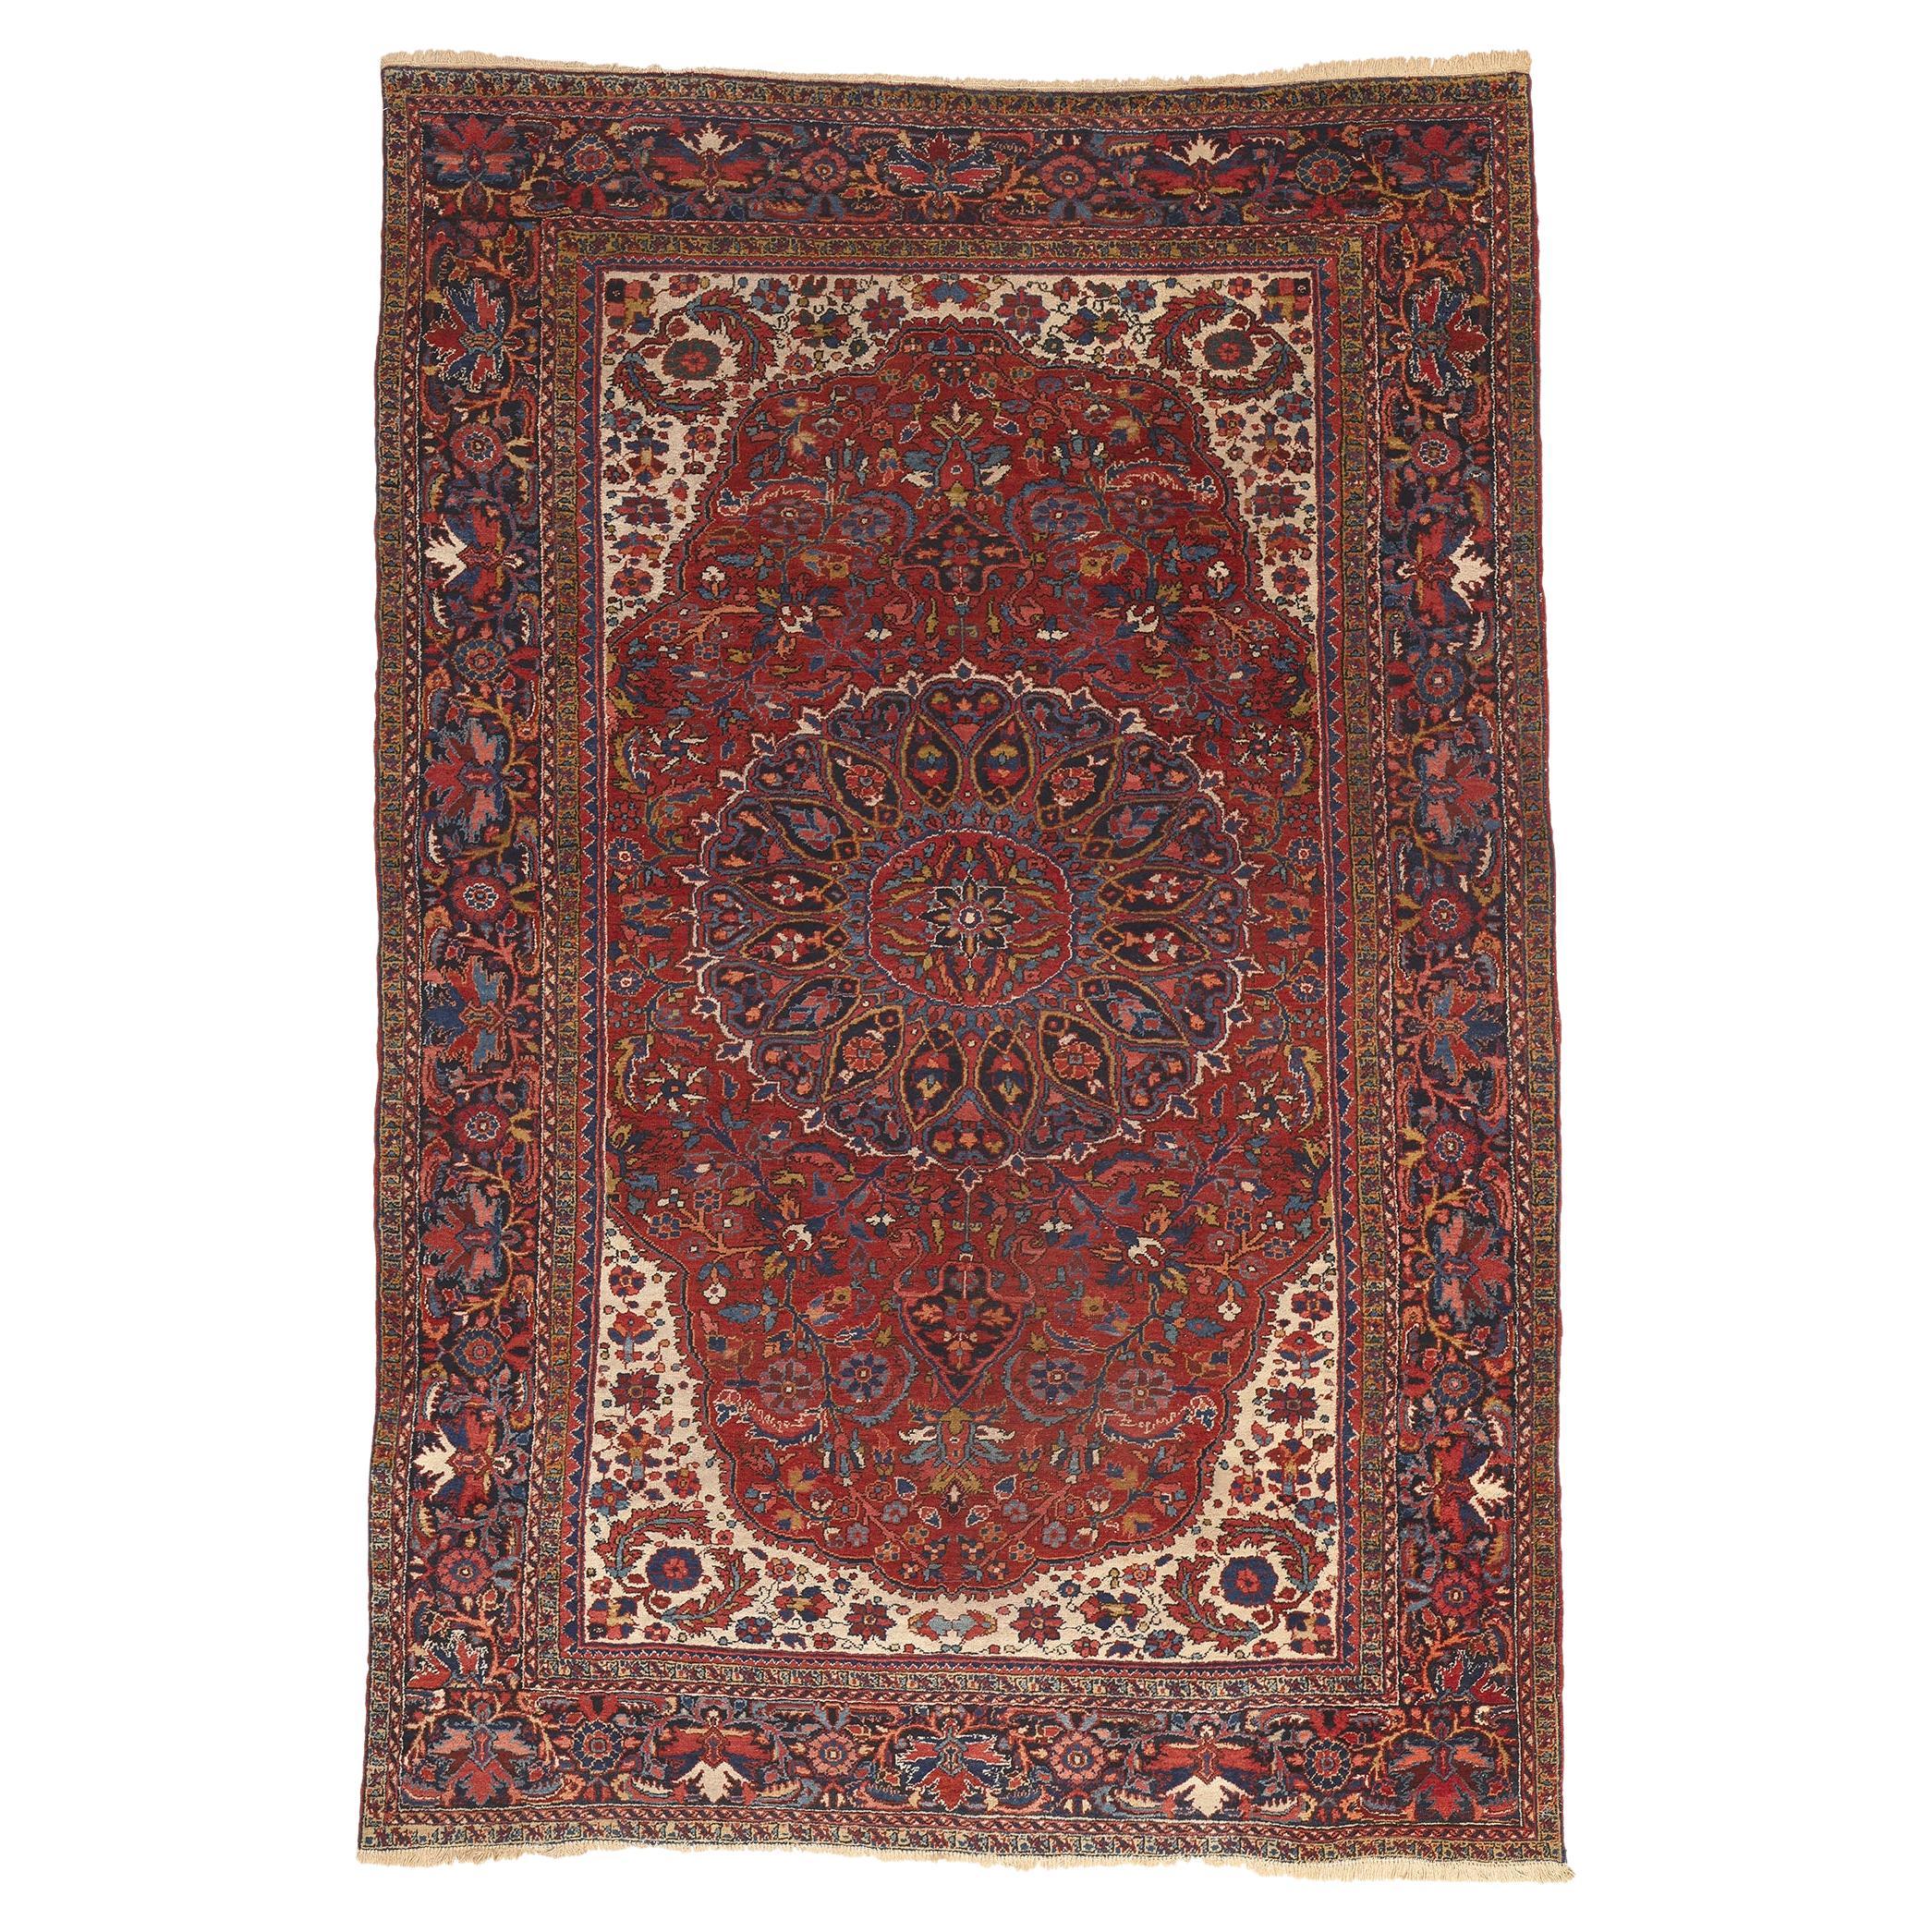 Antique Persian Heriz Rug, Patriotic Finesse Meets Traditional Sensibility